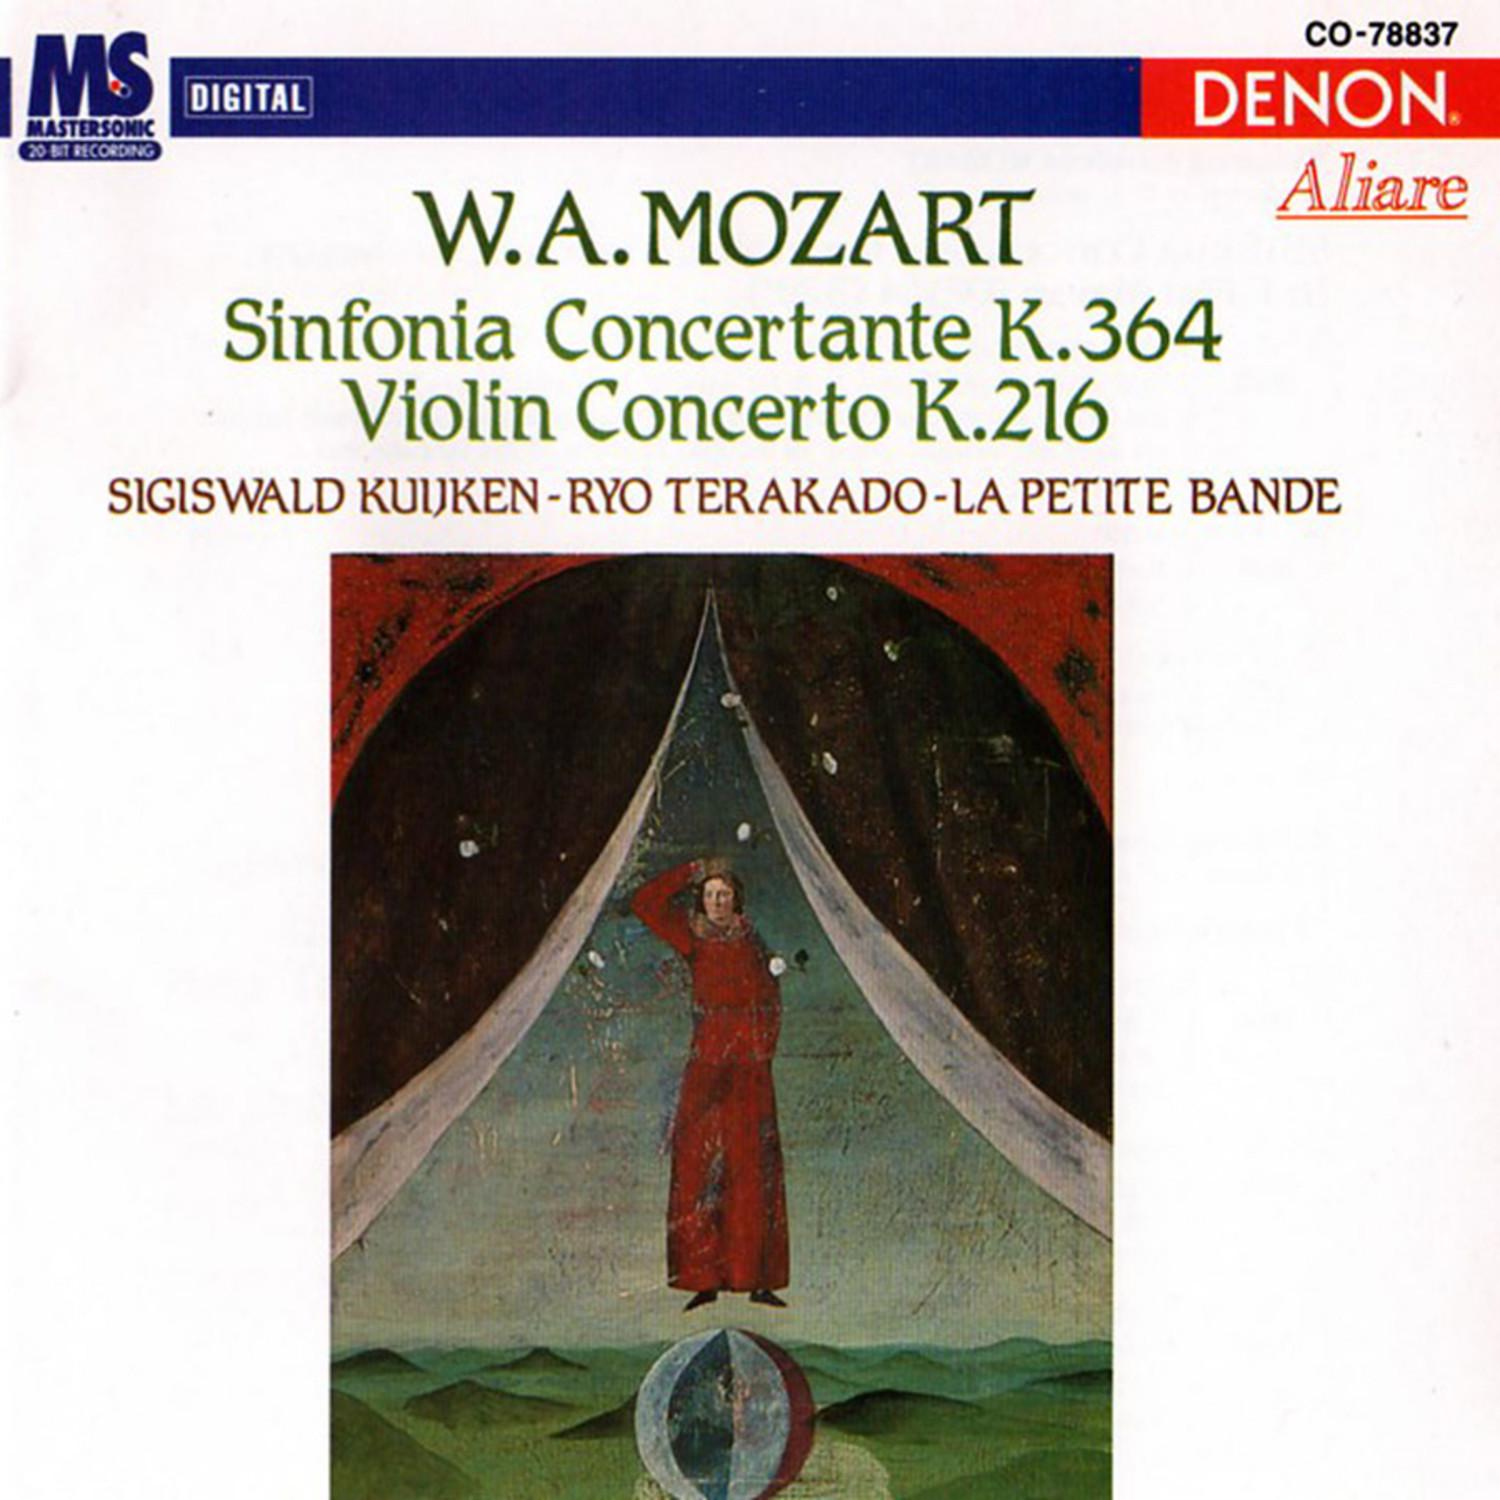 Concerto for Violin & Orchestra in G Major, K. 216: II. Adagio